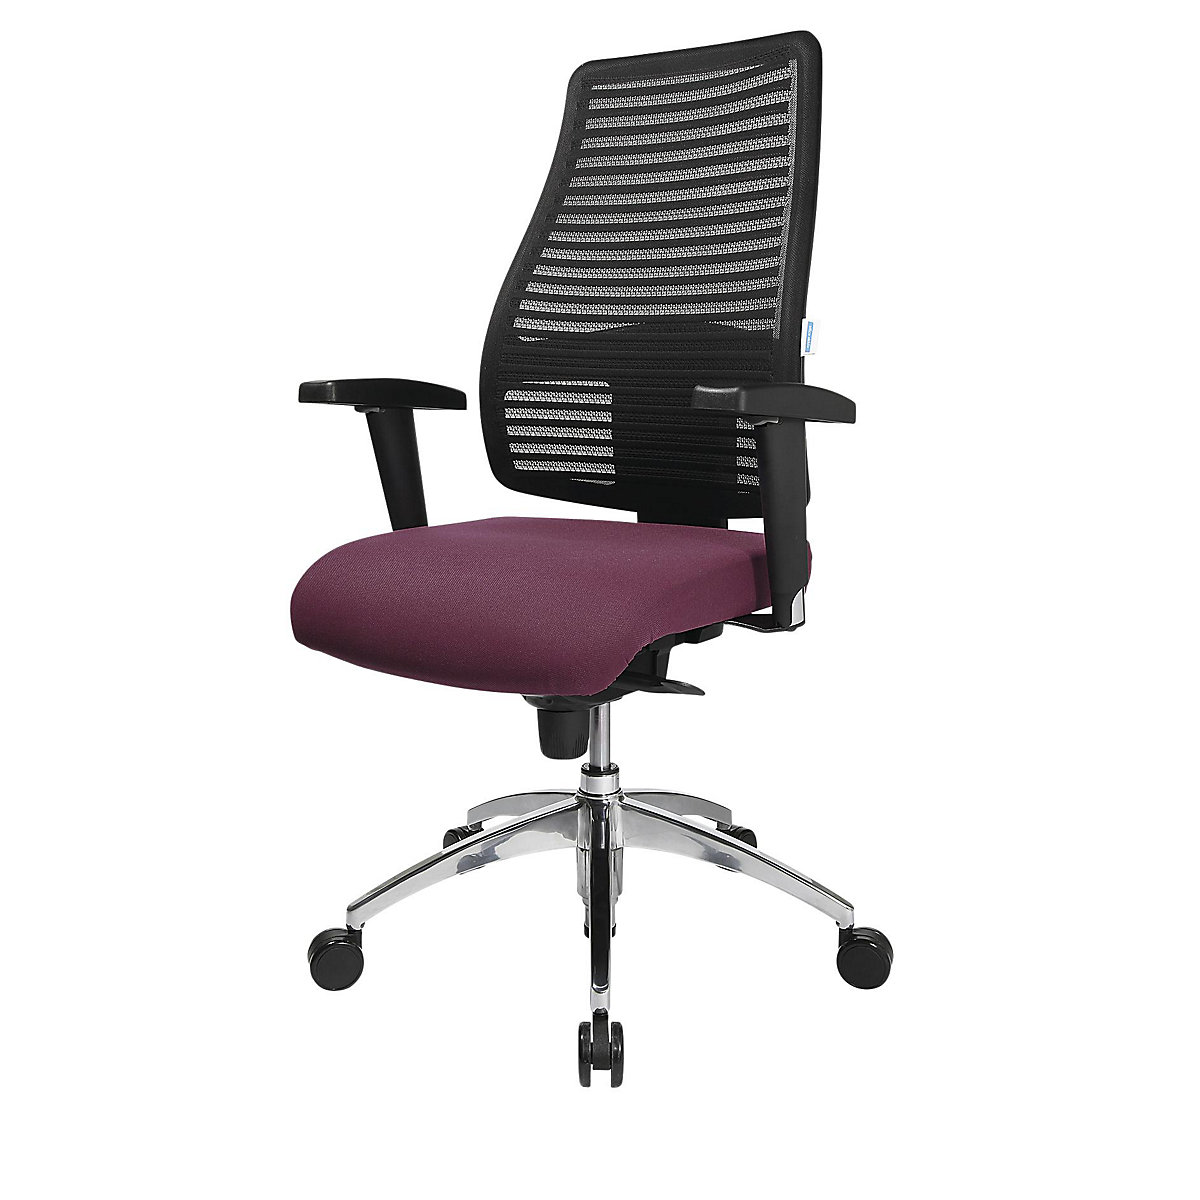 Udobna okretna stolica s mrežastim naslonom za leđa – eurokraft pro (Prikaz proizvoda 2)-1